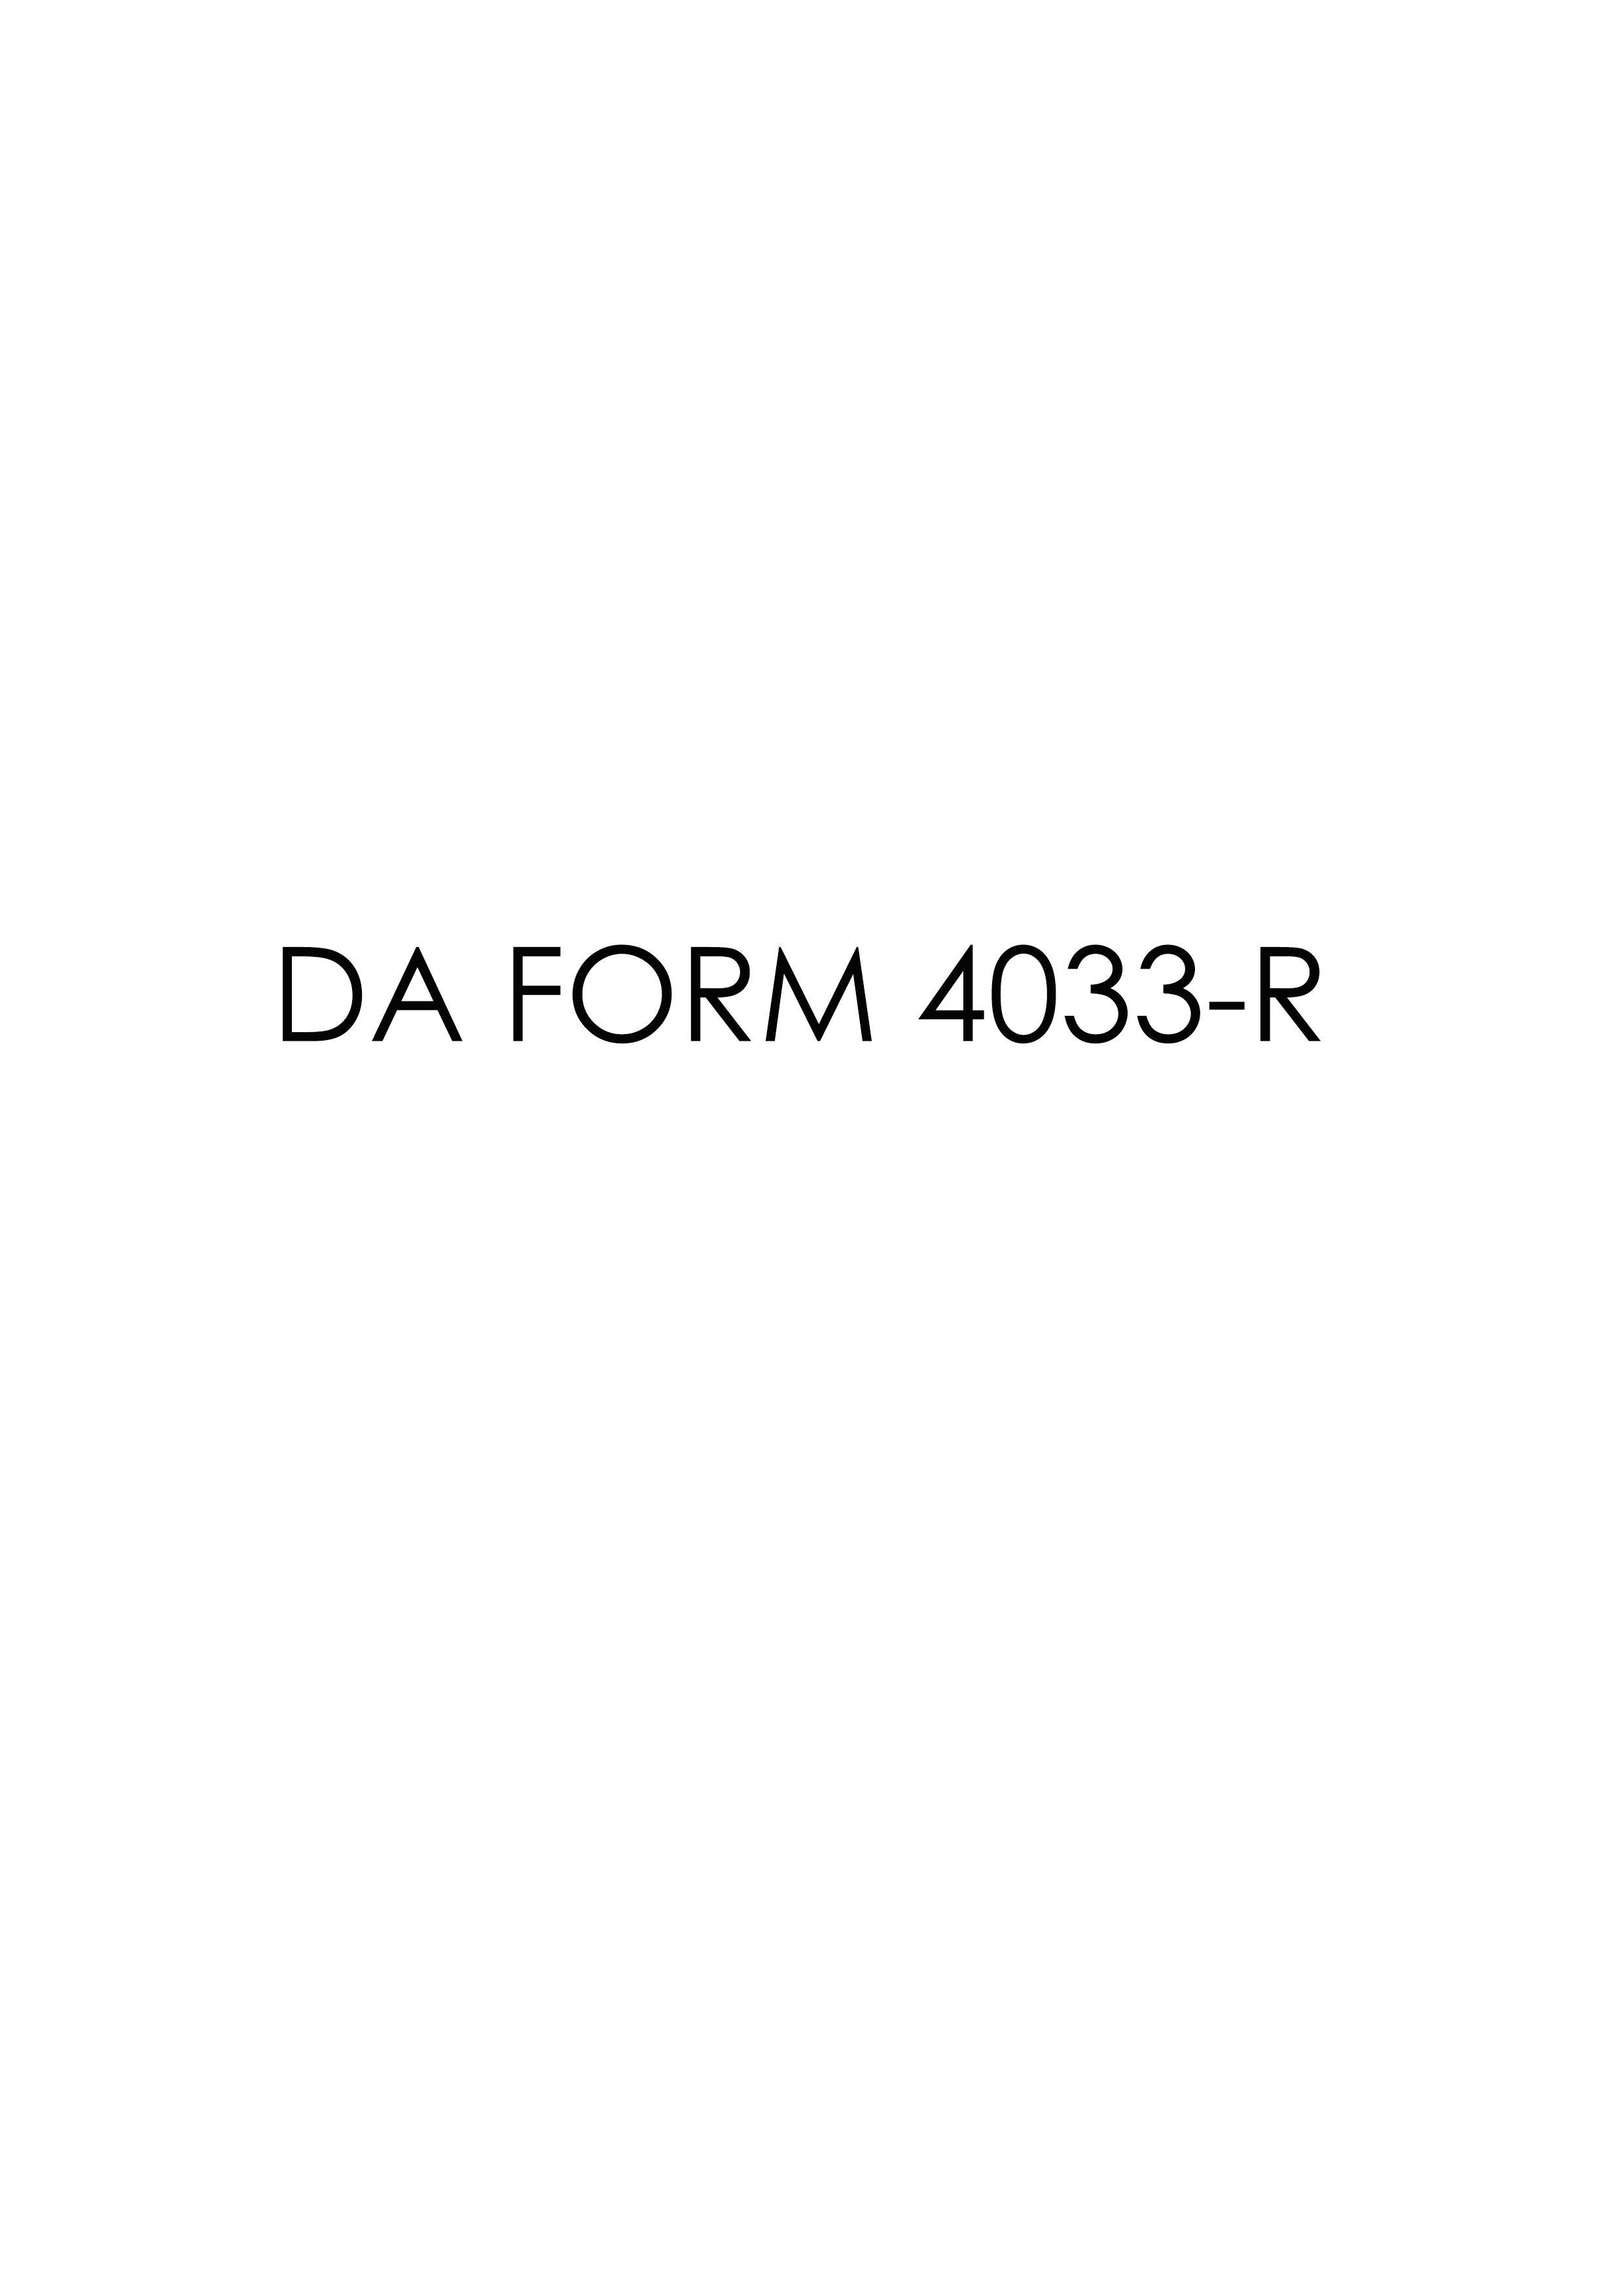 da Form 4033-R fillable